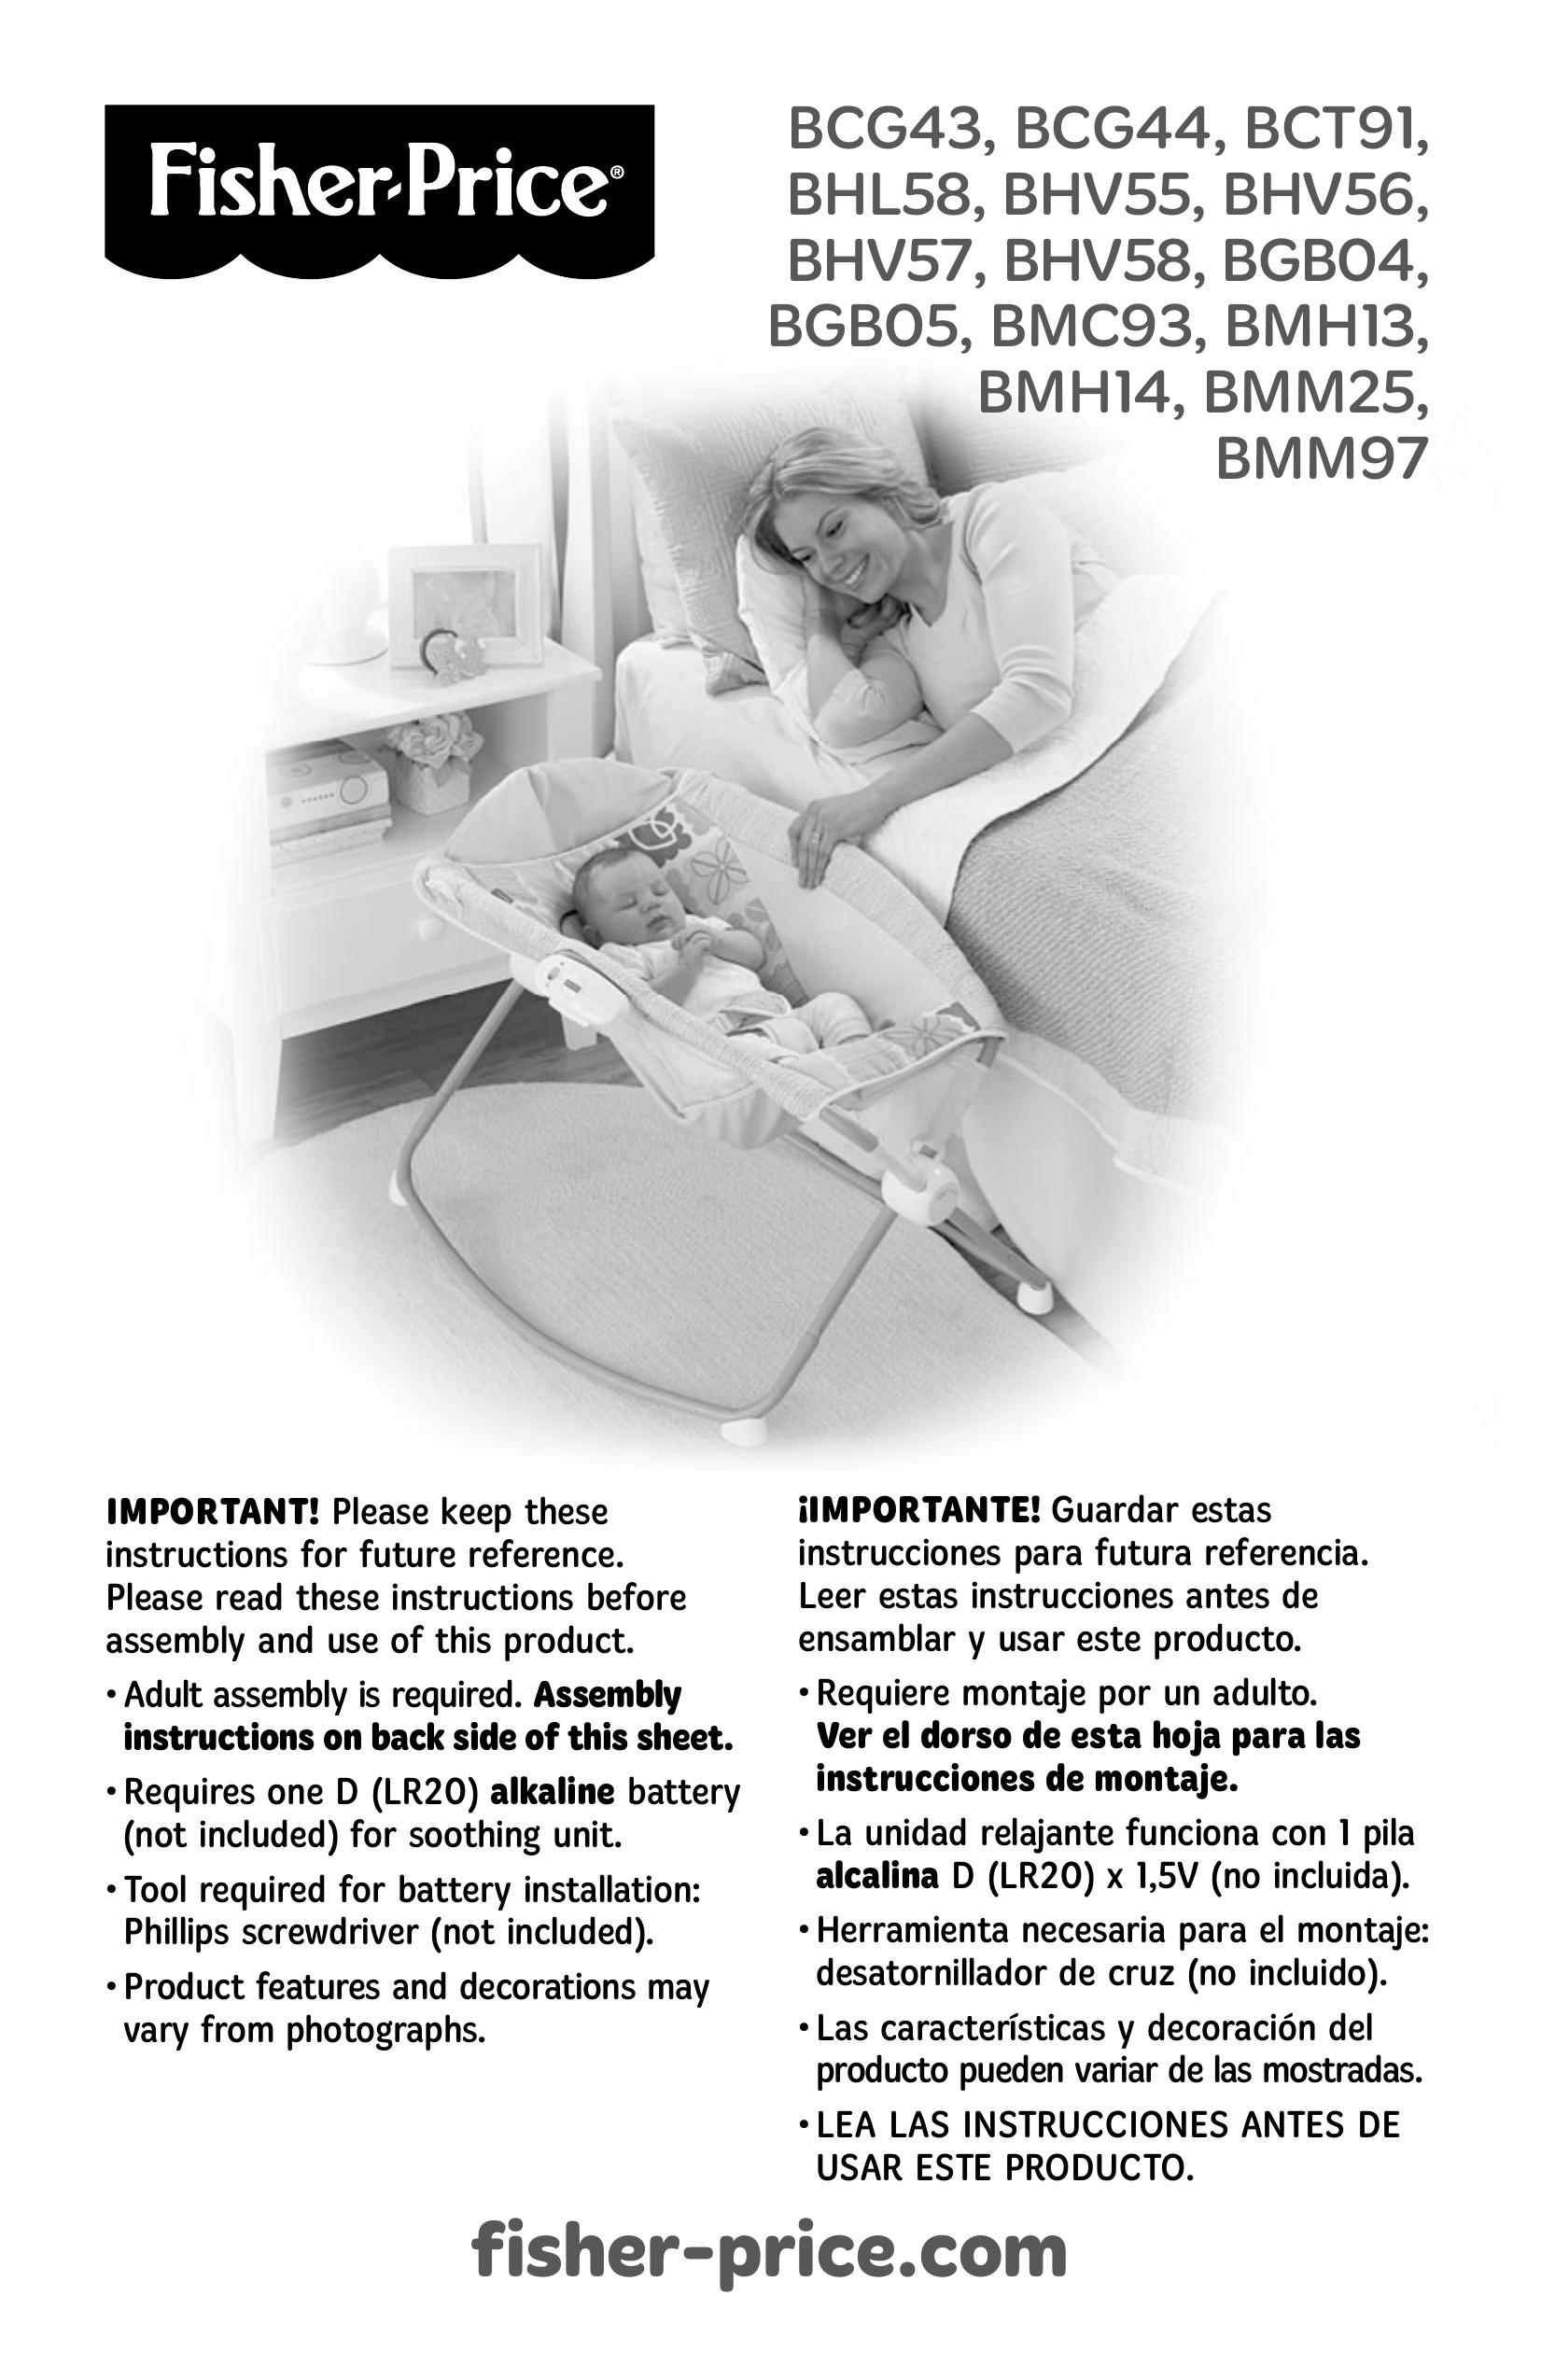 Fisher-Price BMM25 Sleep Apnea Machine User Manual